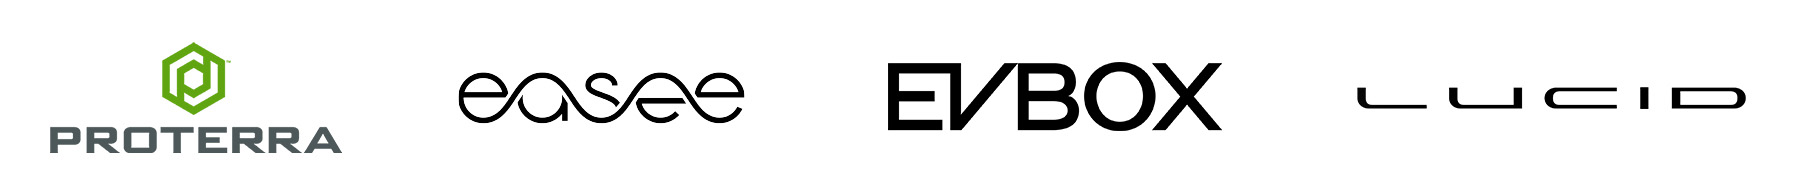 Logos de clients : Proterra, Easee, EVBox et Lucid